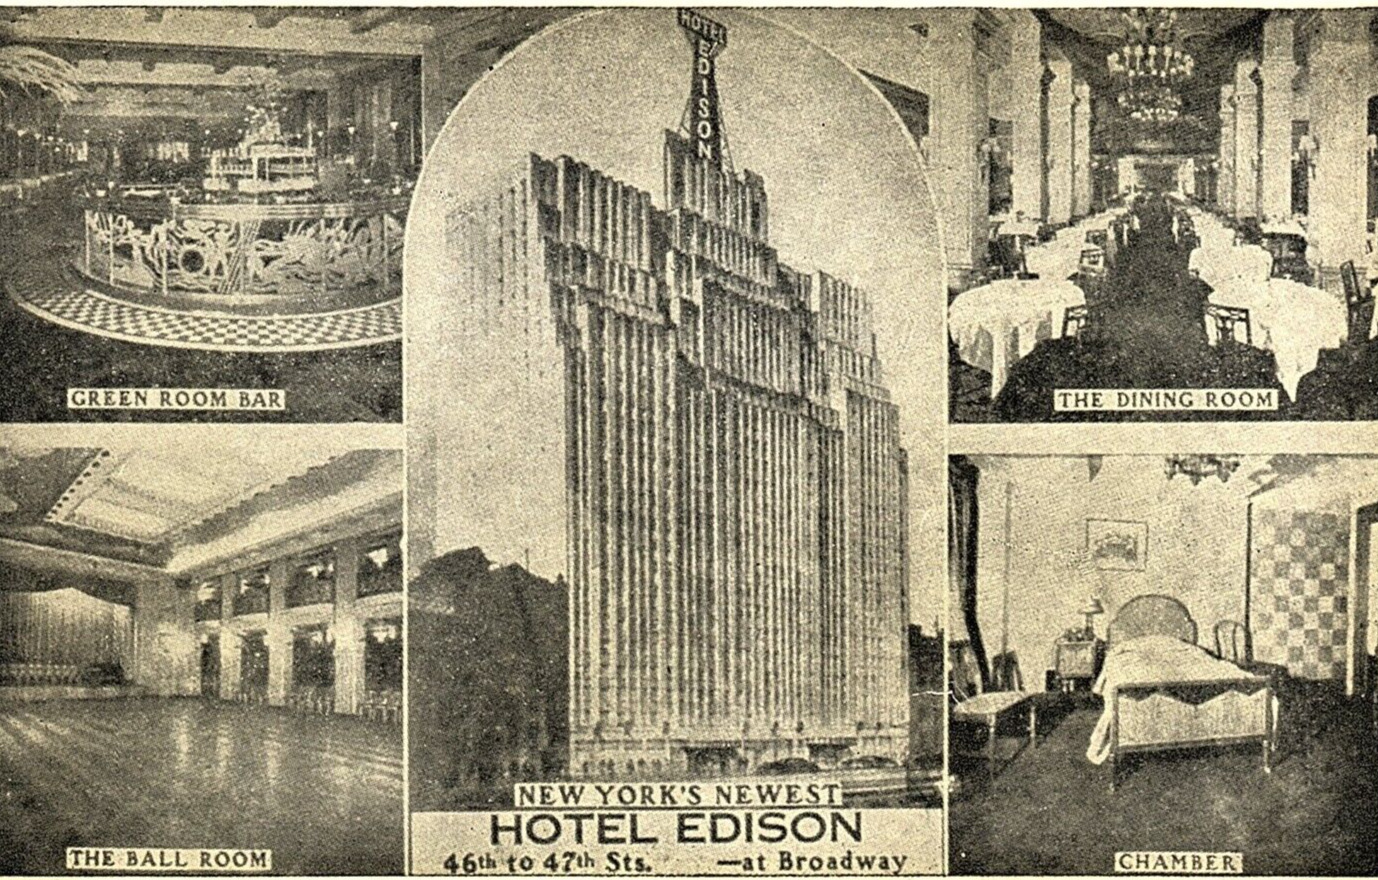 c1915 NEW YORK HOTEL EDISON AT BROADWAY MARIA KRAMER PRESIDENT POSTCARD 44-170